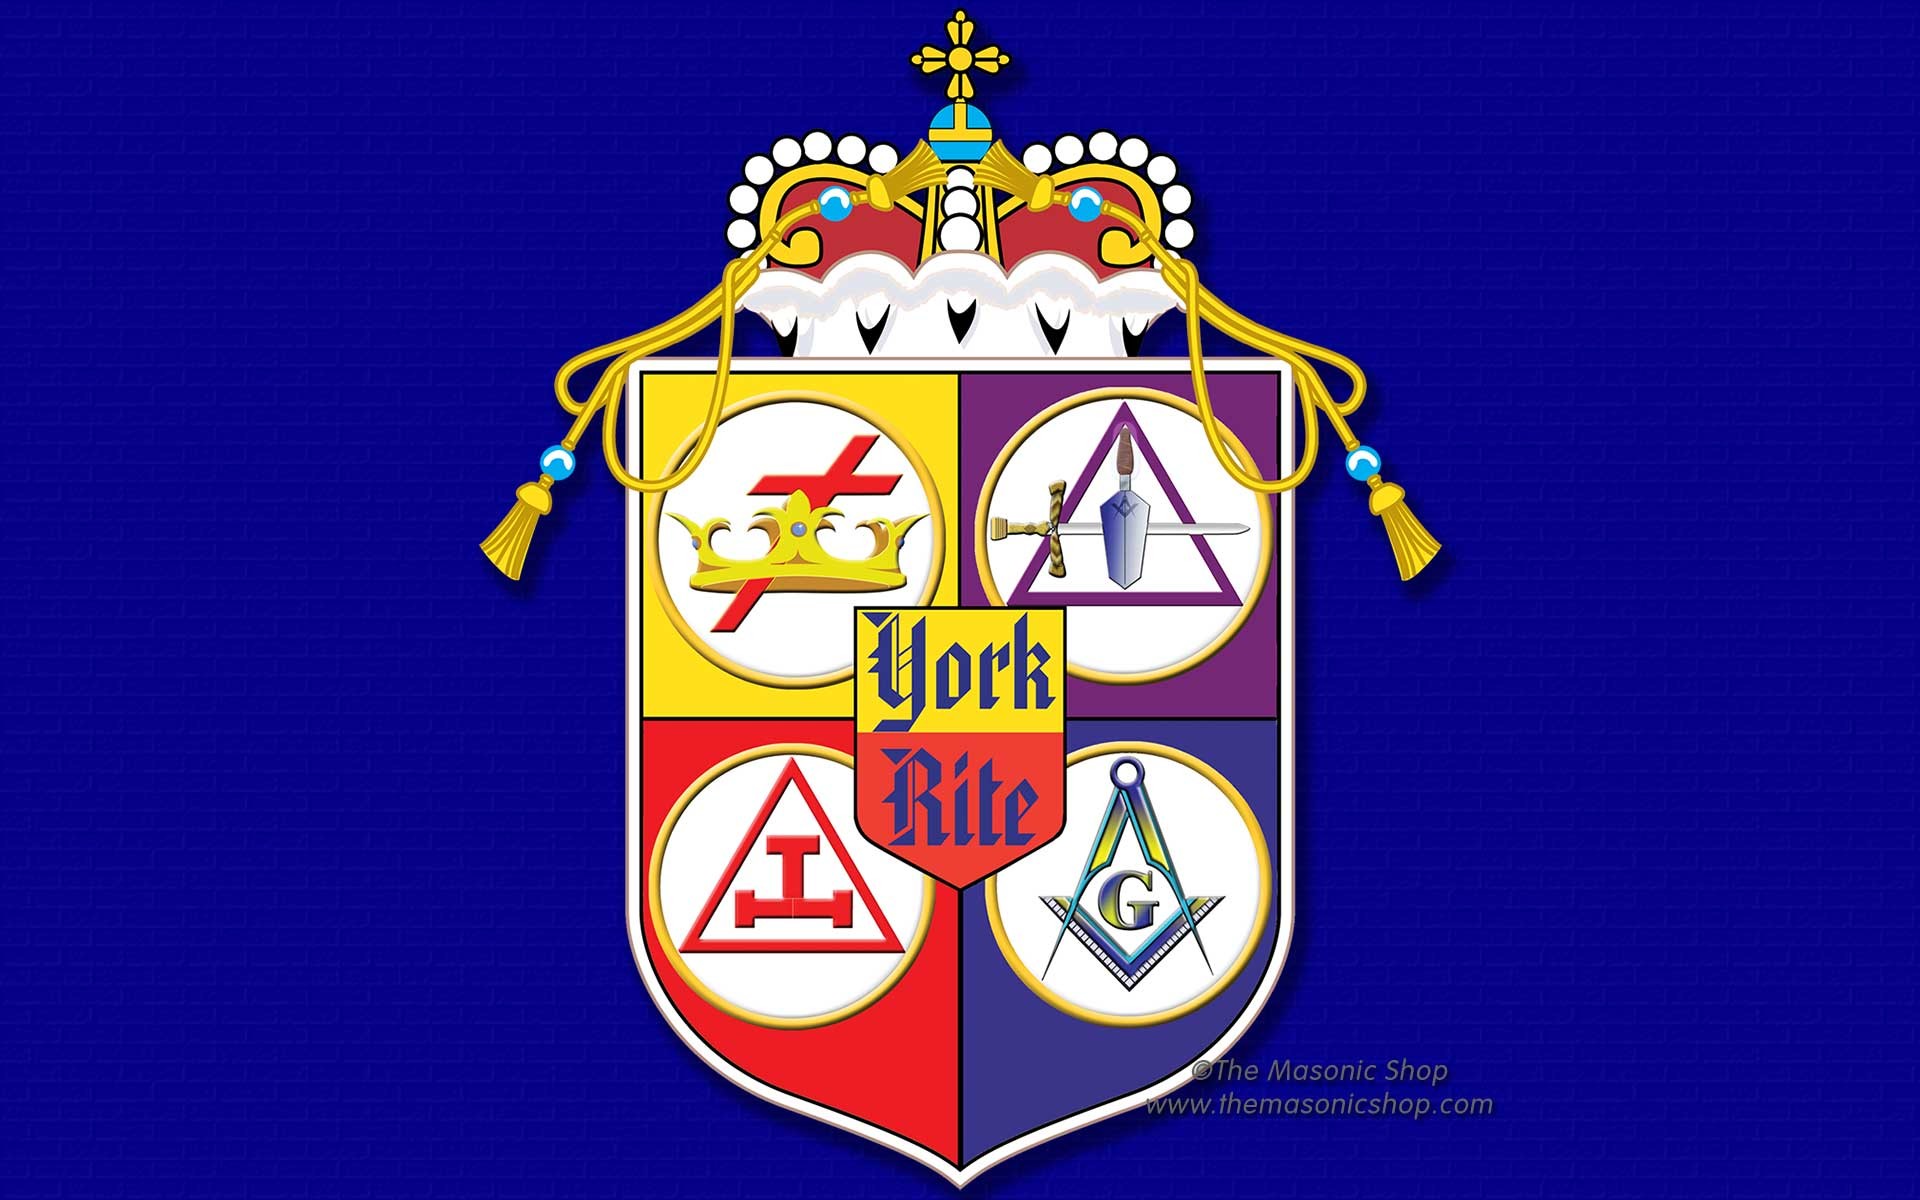 York Rite Shield